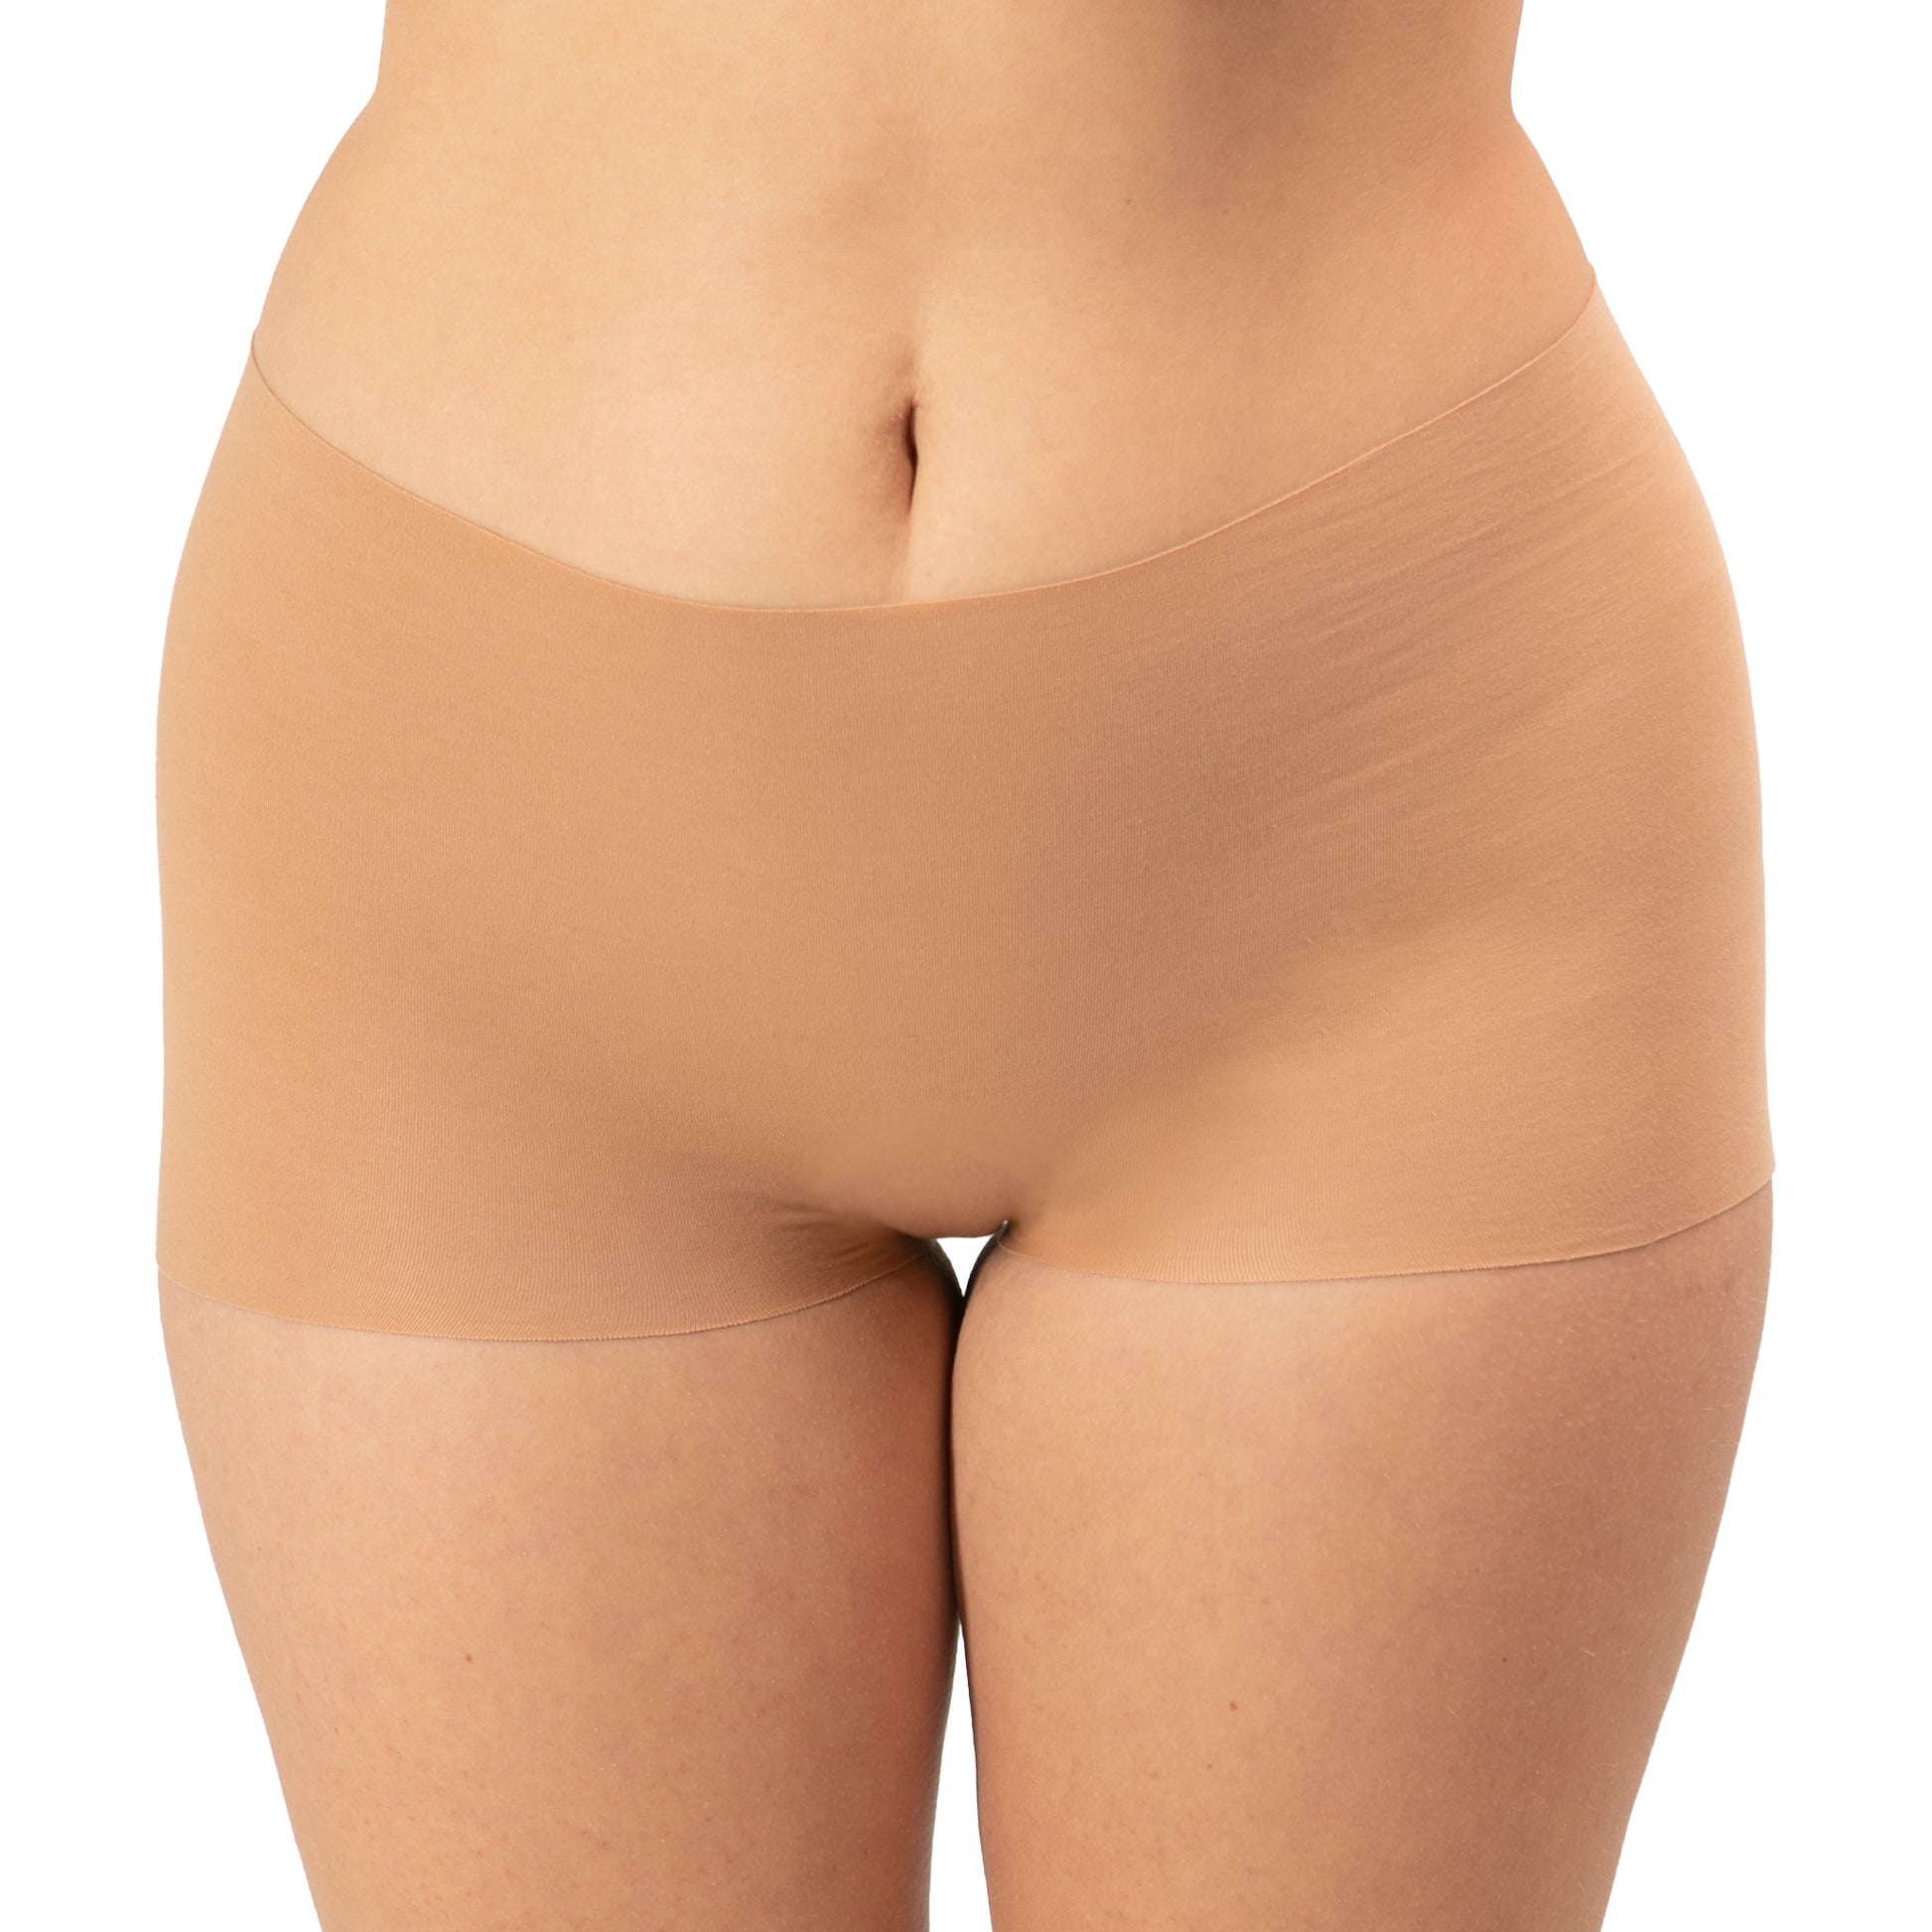 Women's Organic Cotton Shortie Underwear in color Sand - Front View